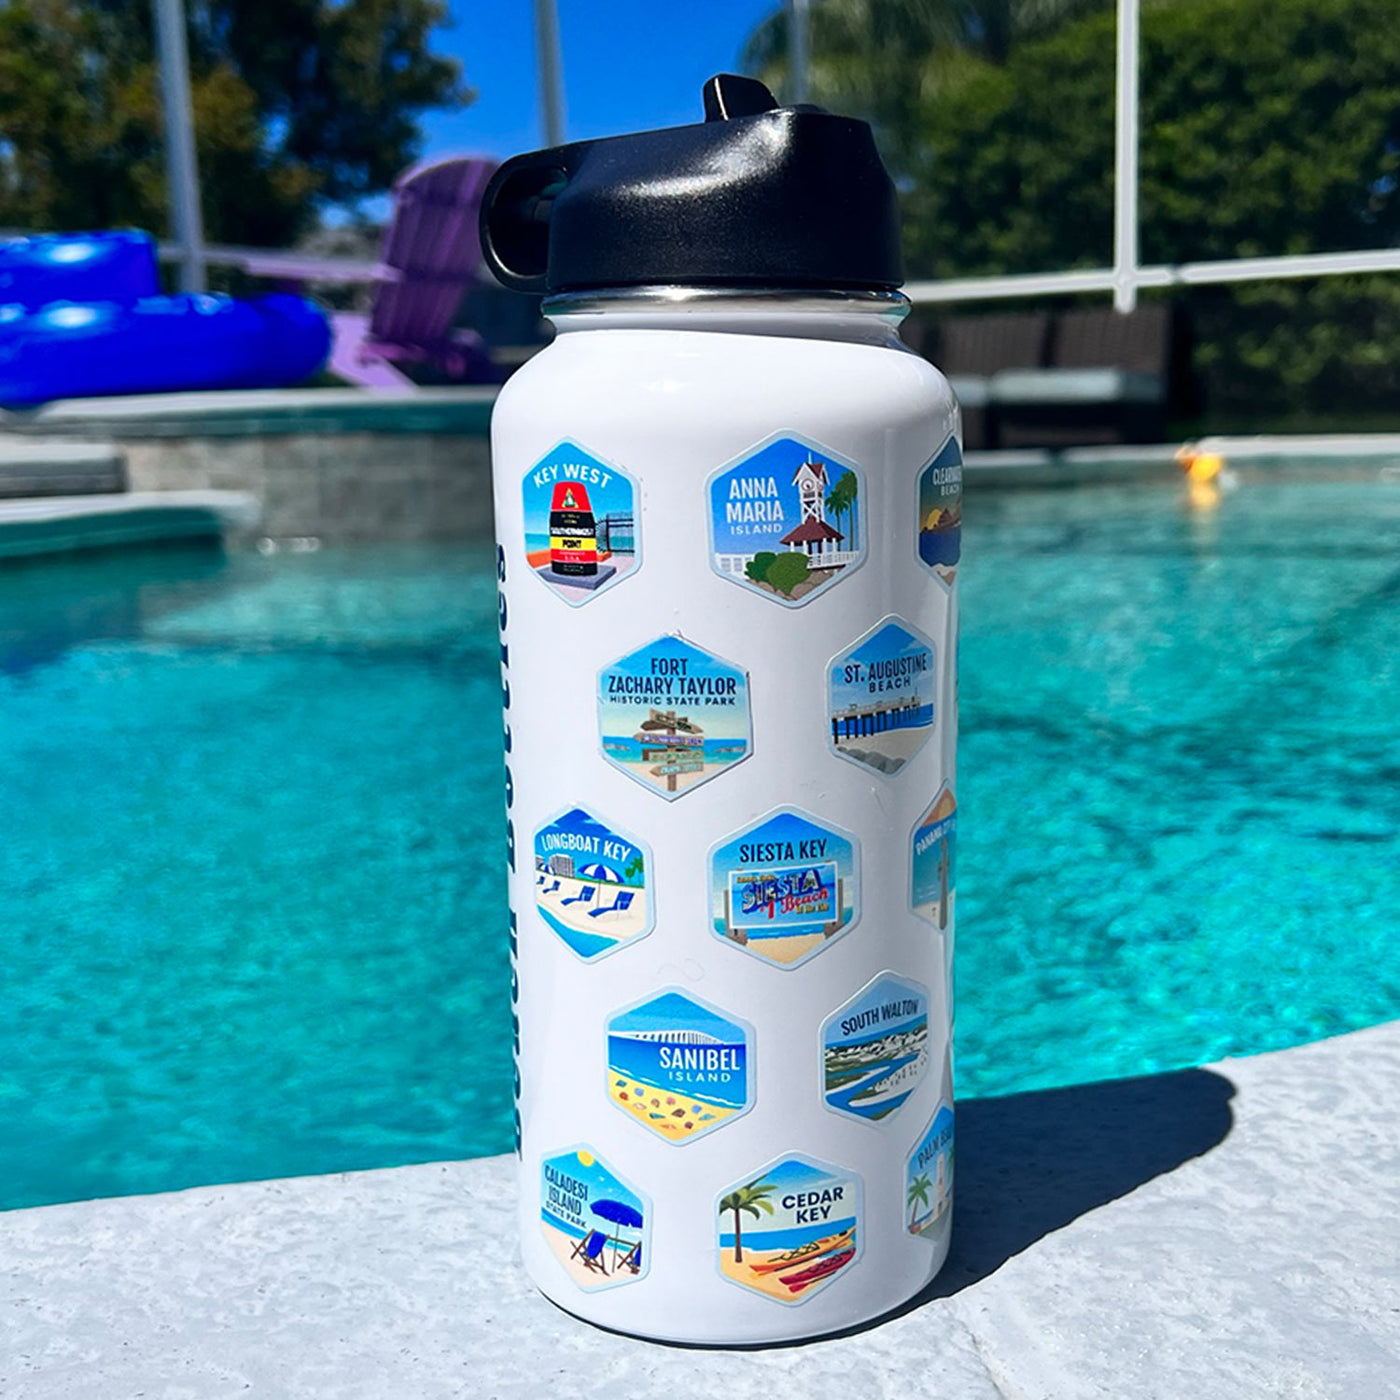 Florida Beach Towns Water Bottle Show Stickers Of Key West, Anna Maria Island, Siesta Key, Sanibel Island, Cedar Key, St Augustine Beach, and More